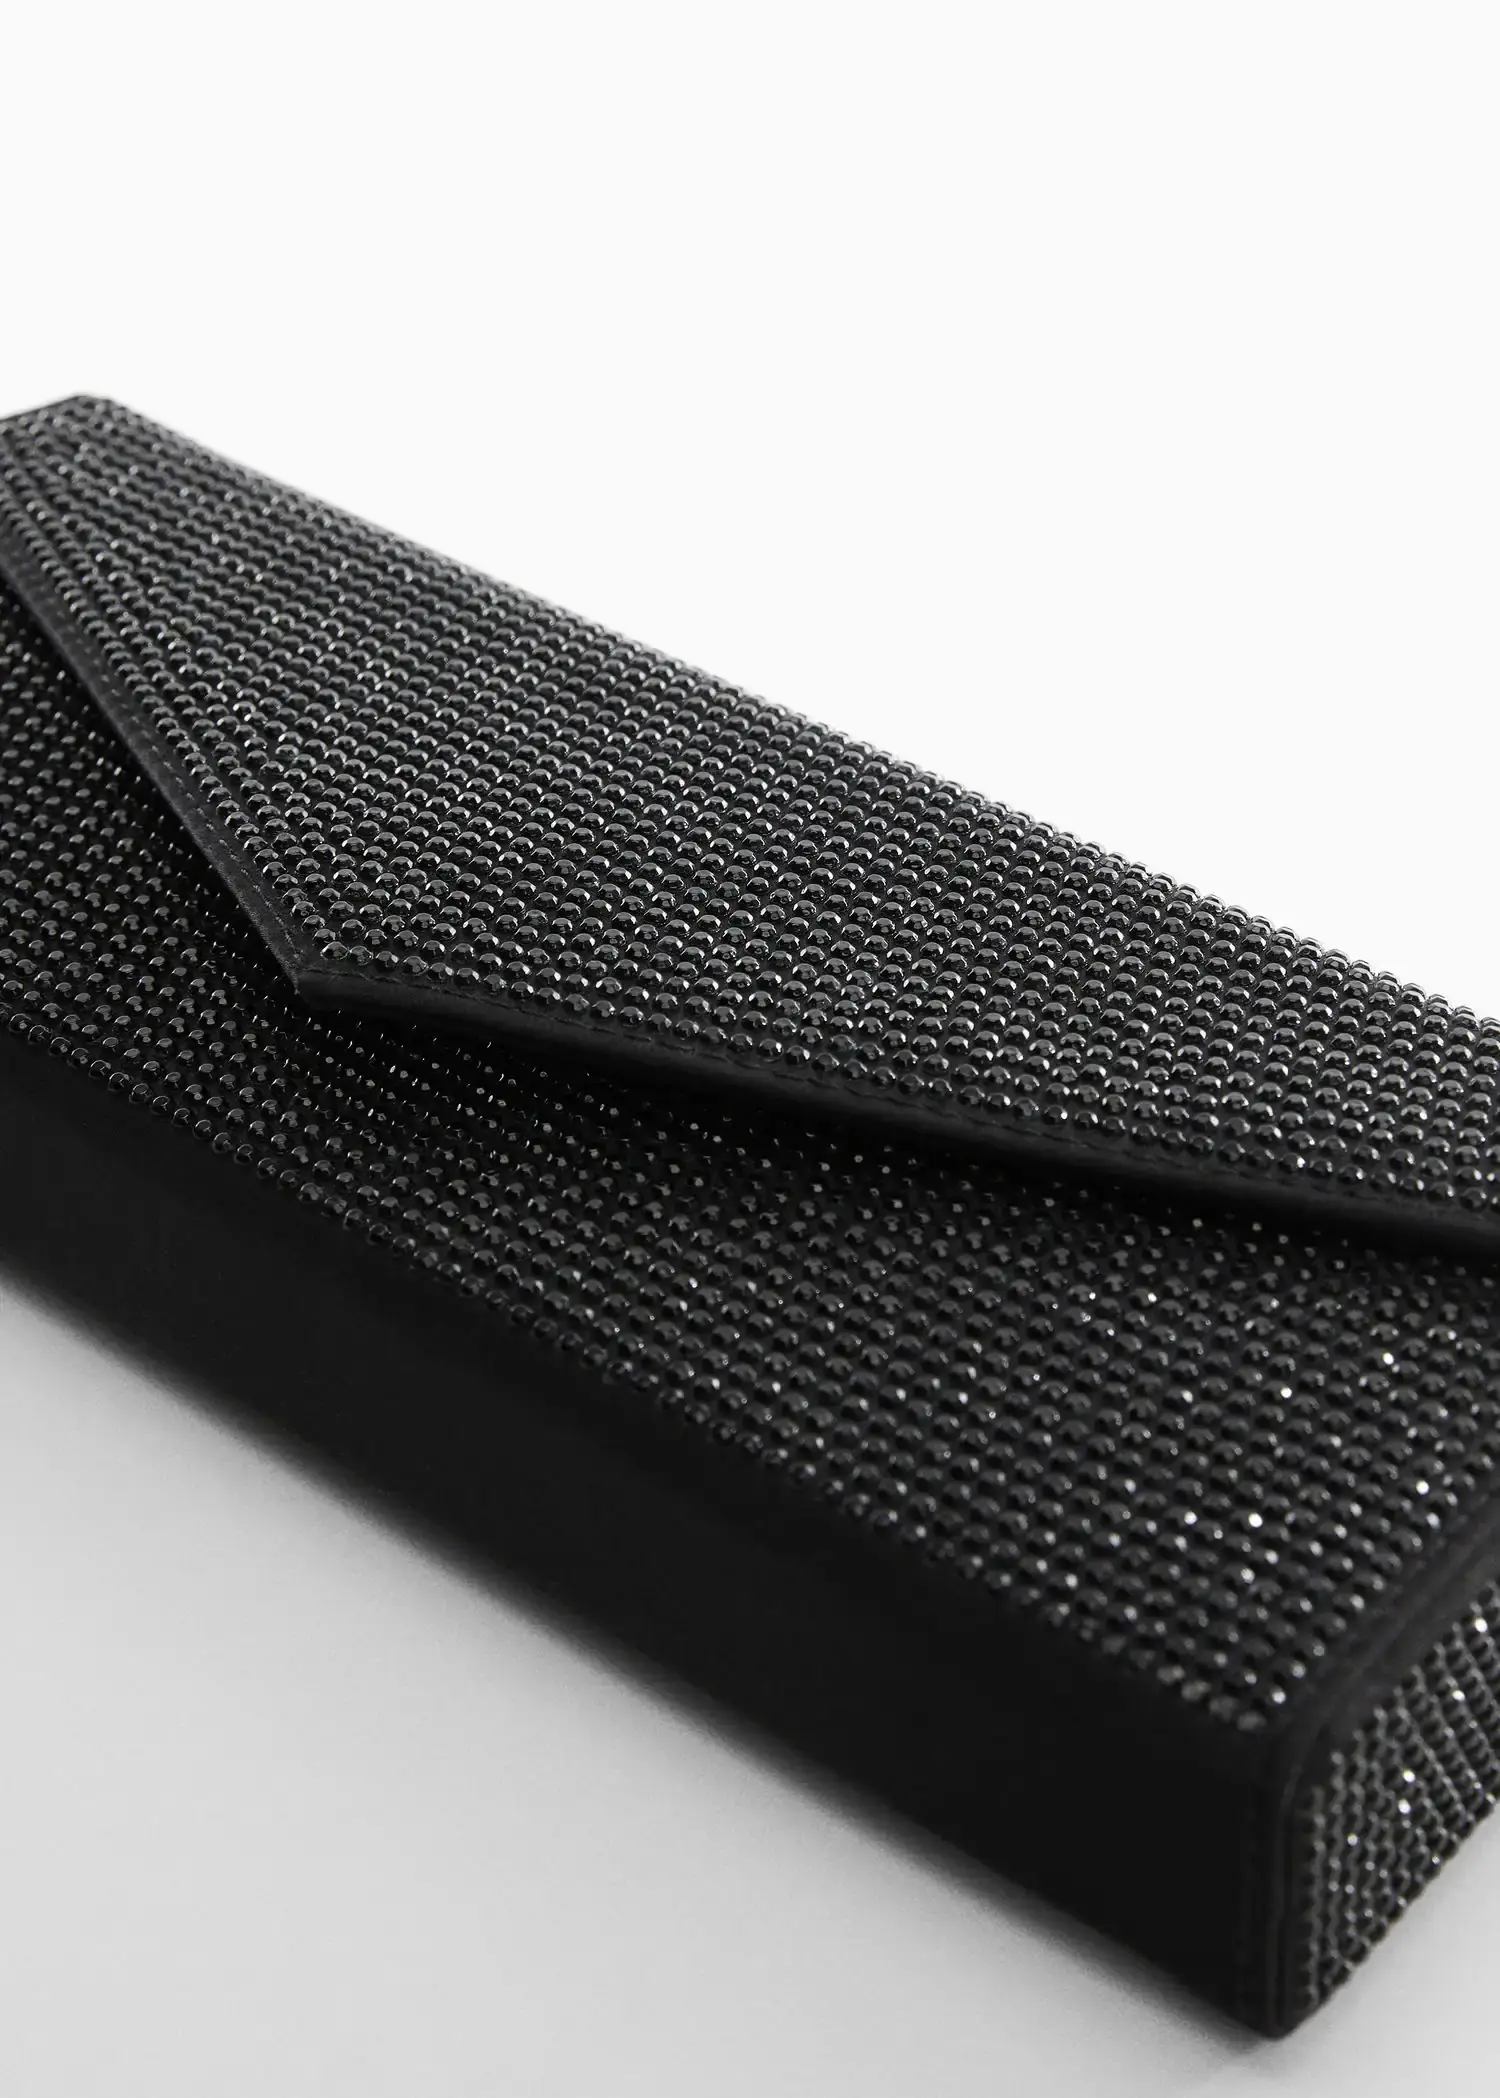 Mango Rigid crystal bag. a close-up of a black purse on a white surface. 